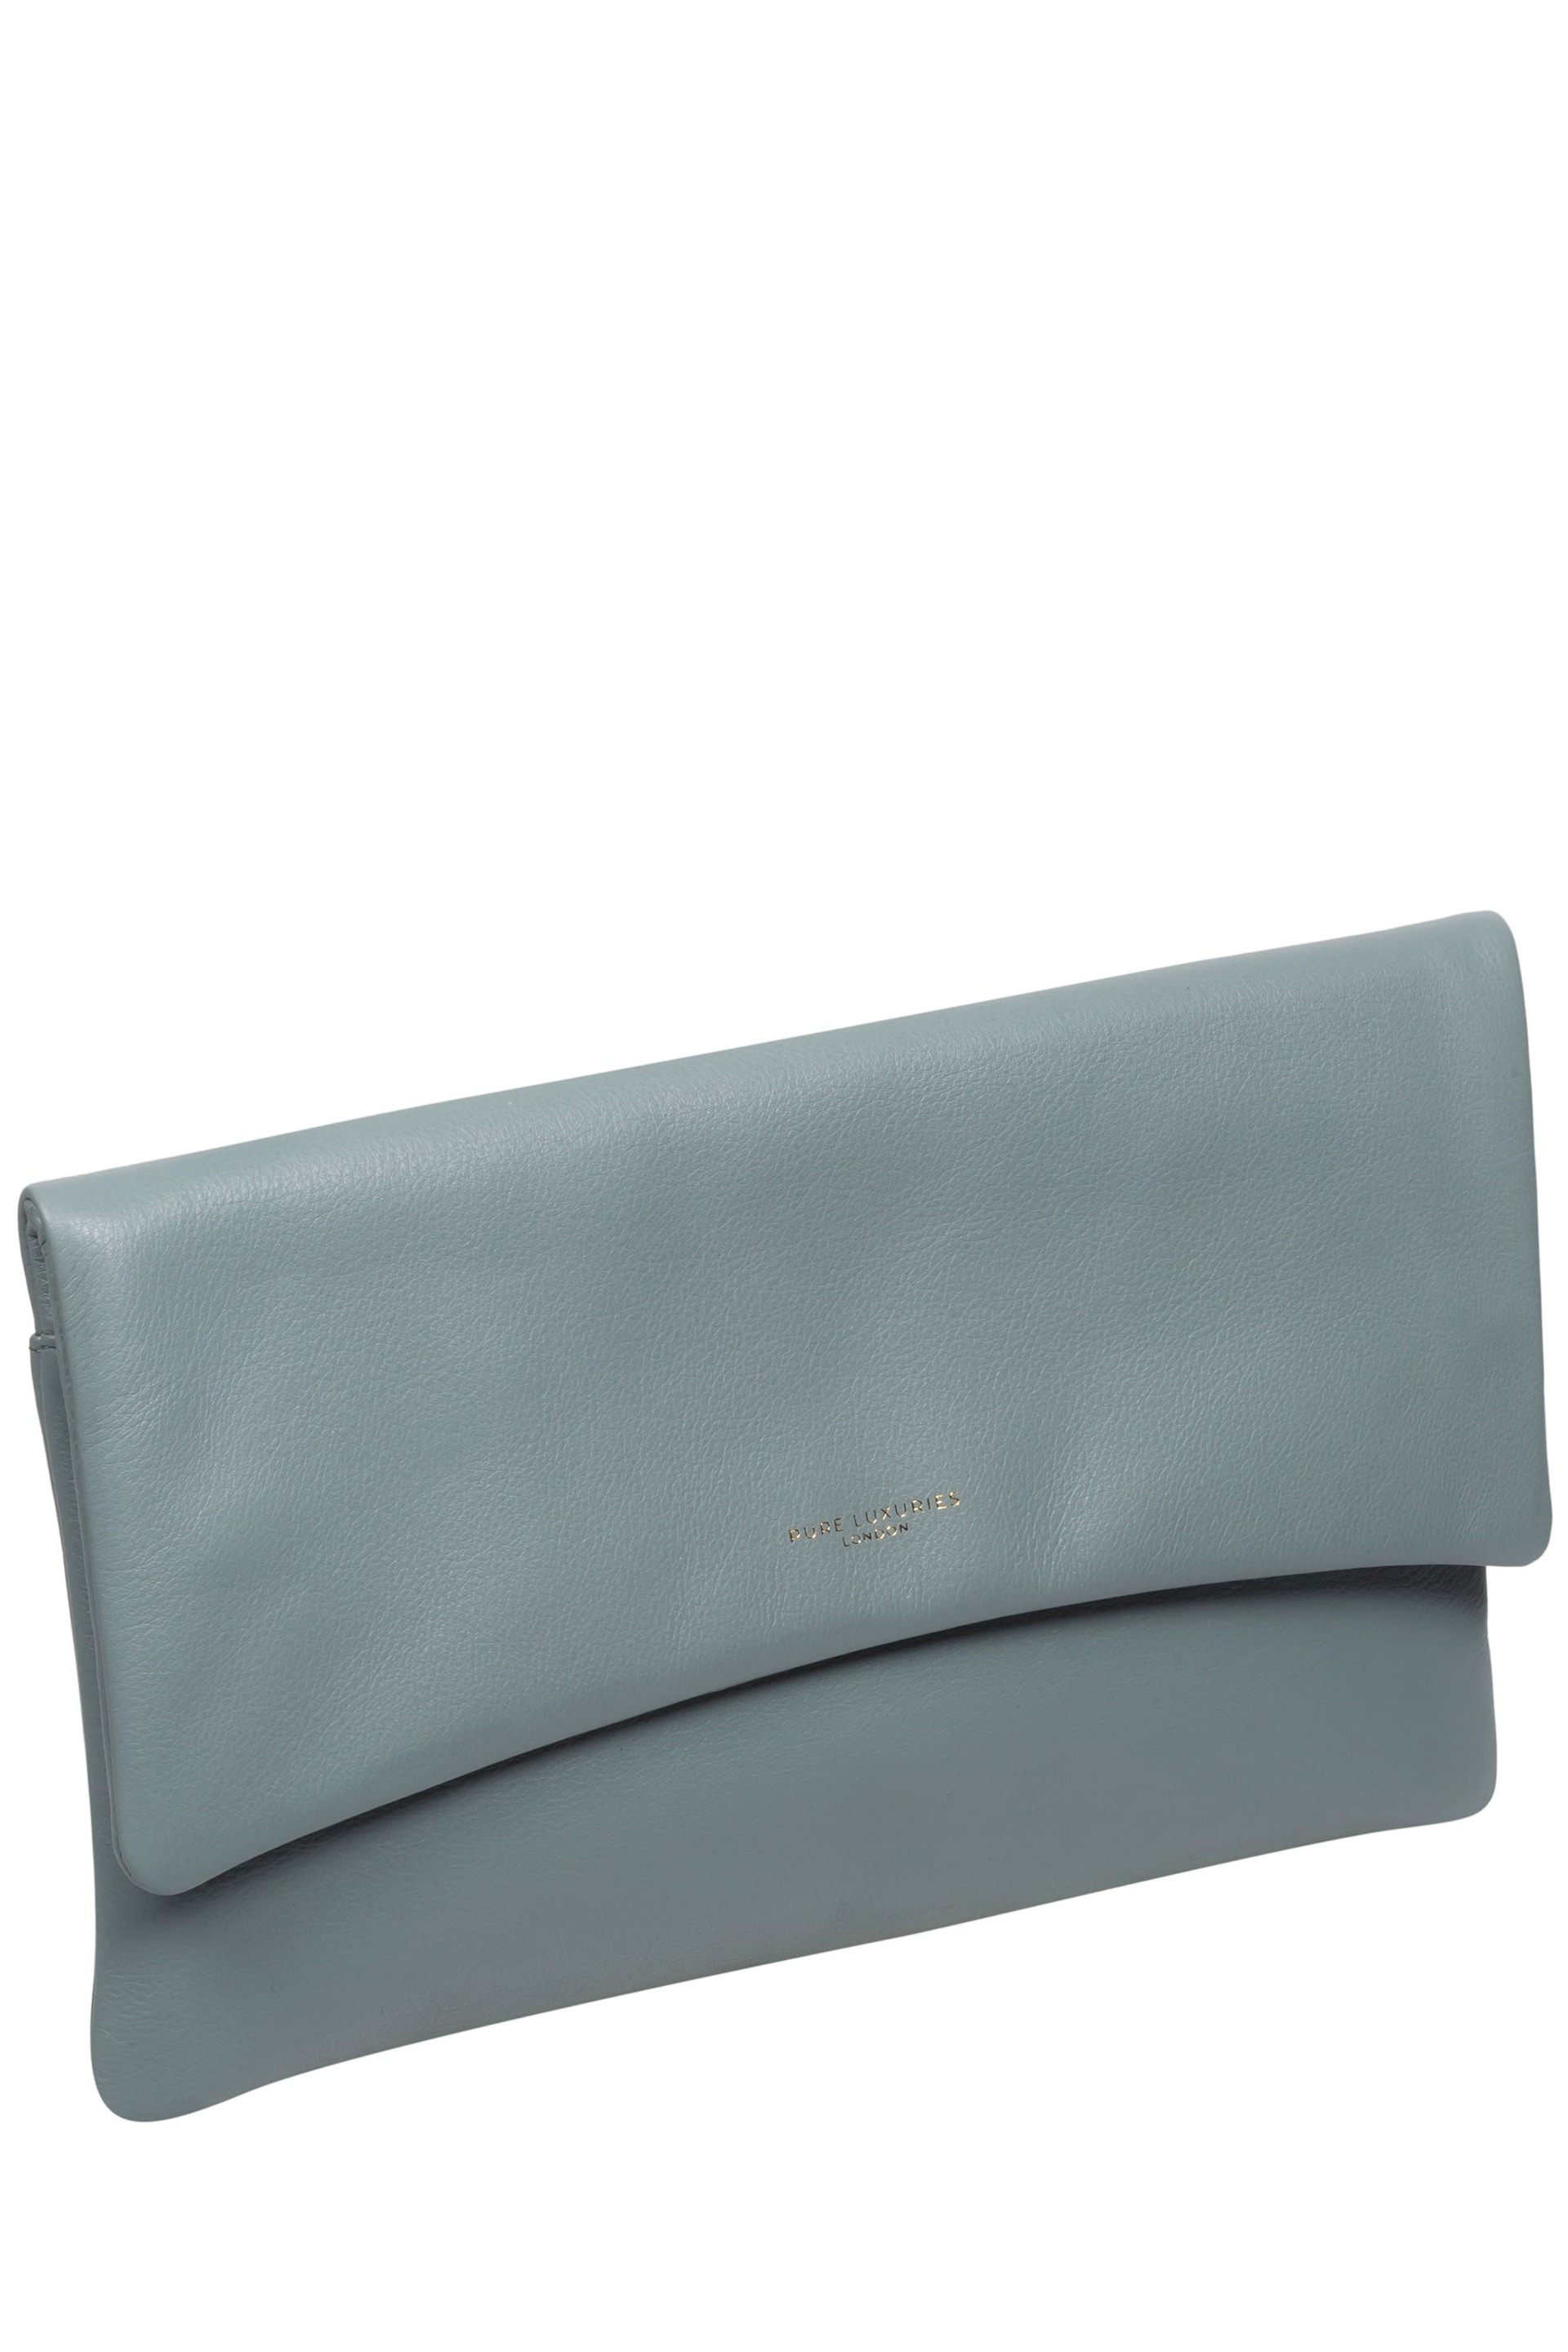 Pure Luxuries London Amelia Nappa Leather Clutch Bag - Image 5 of 5